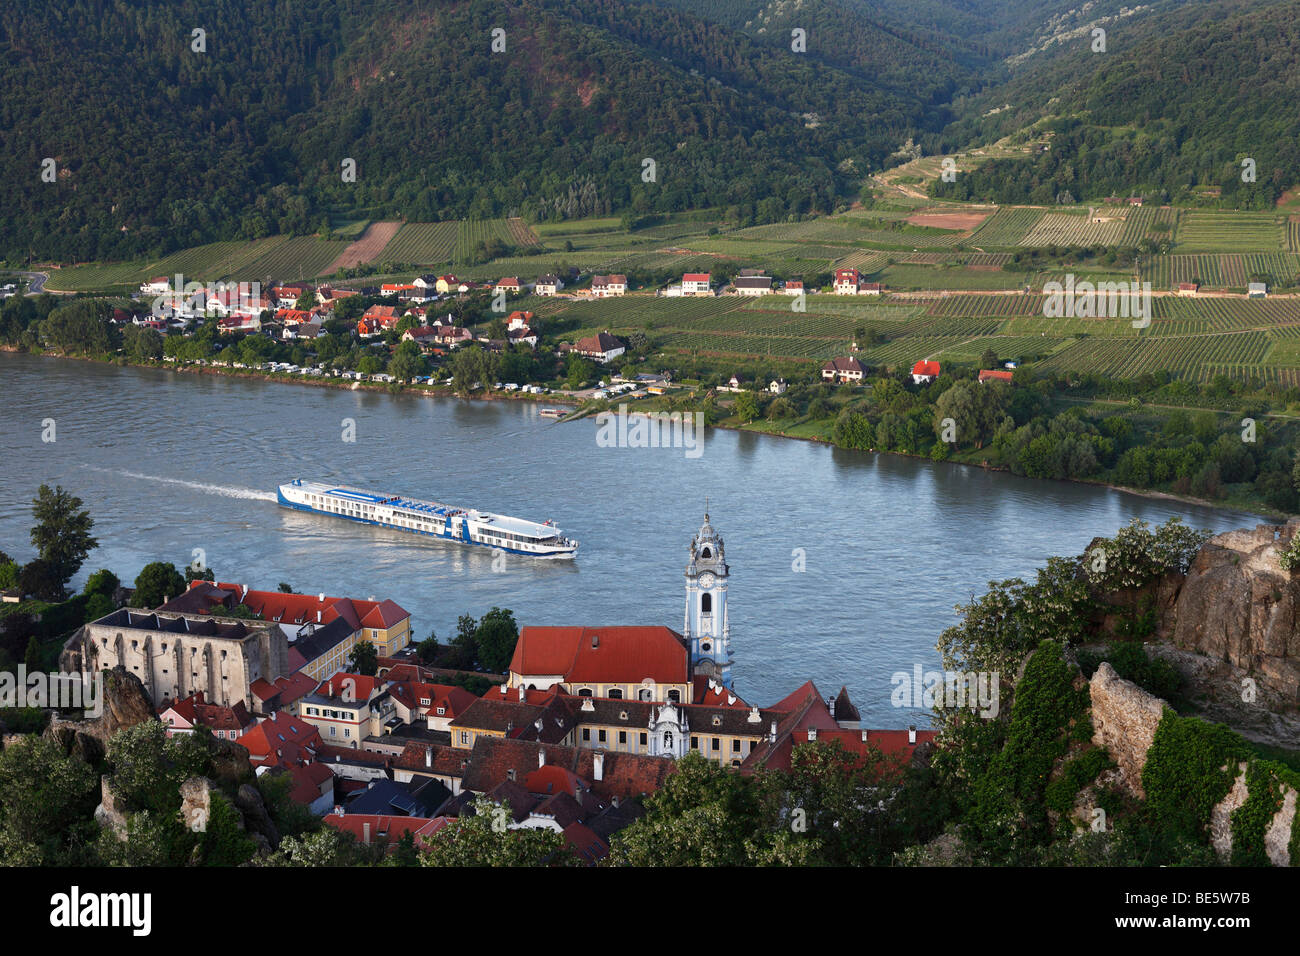 Duernstein, nave da crociera sul fiume Danubio, regione di Wachau, Austria Inferiore, Austria, Europa Foto Stock